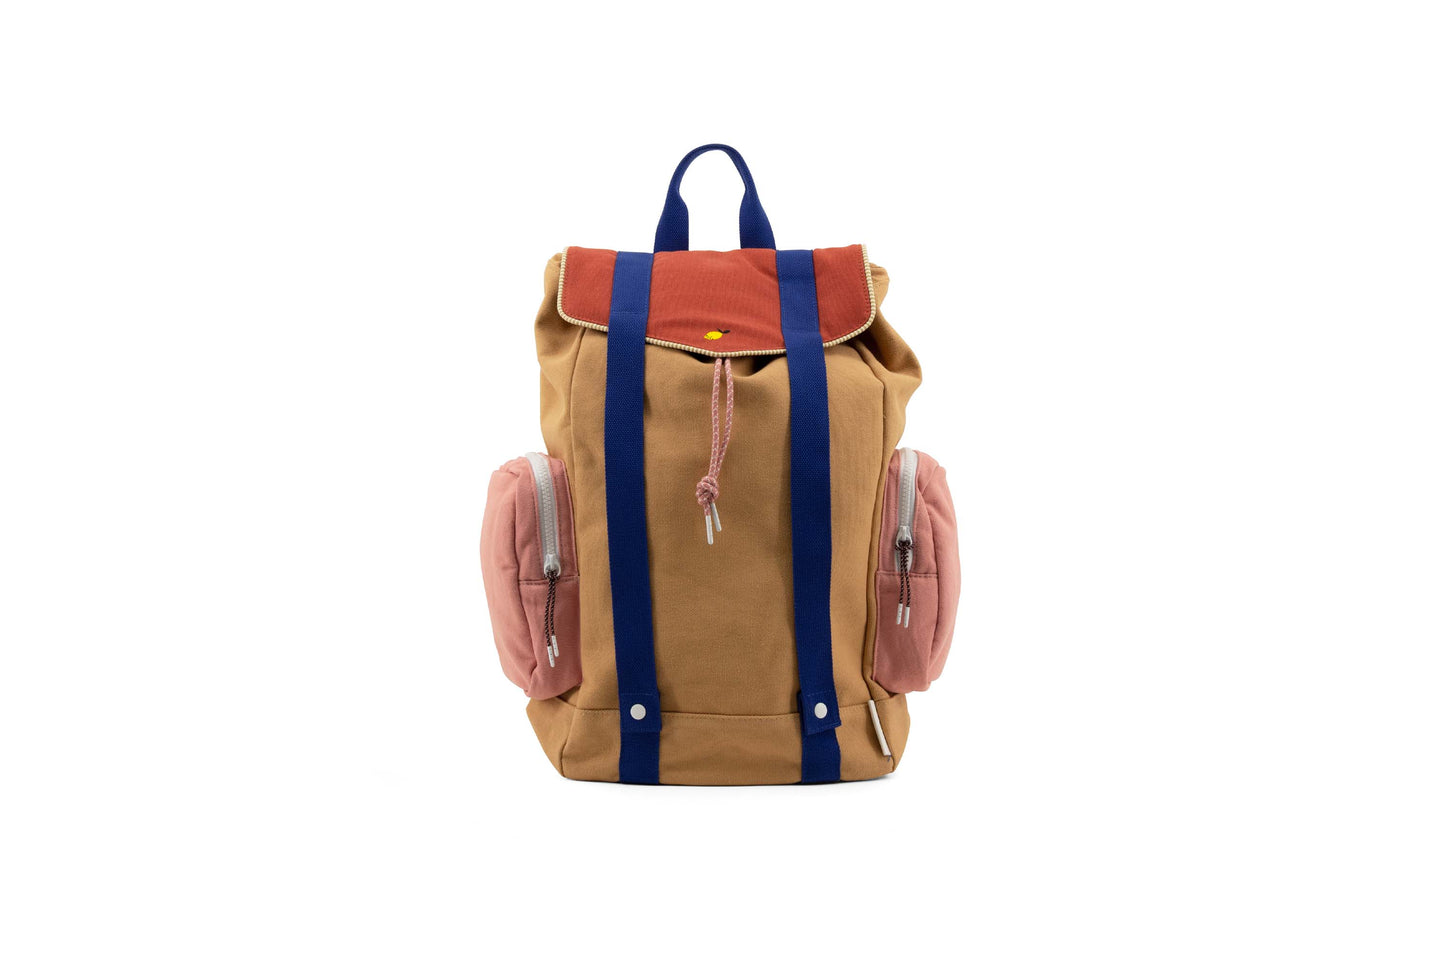 Backpack large • adventure • meet me in the meadows